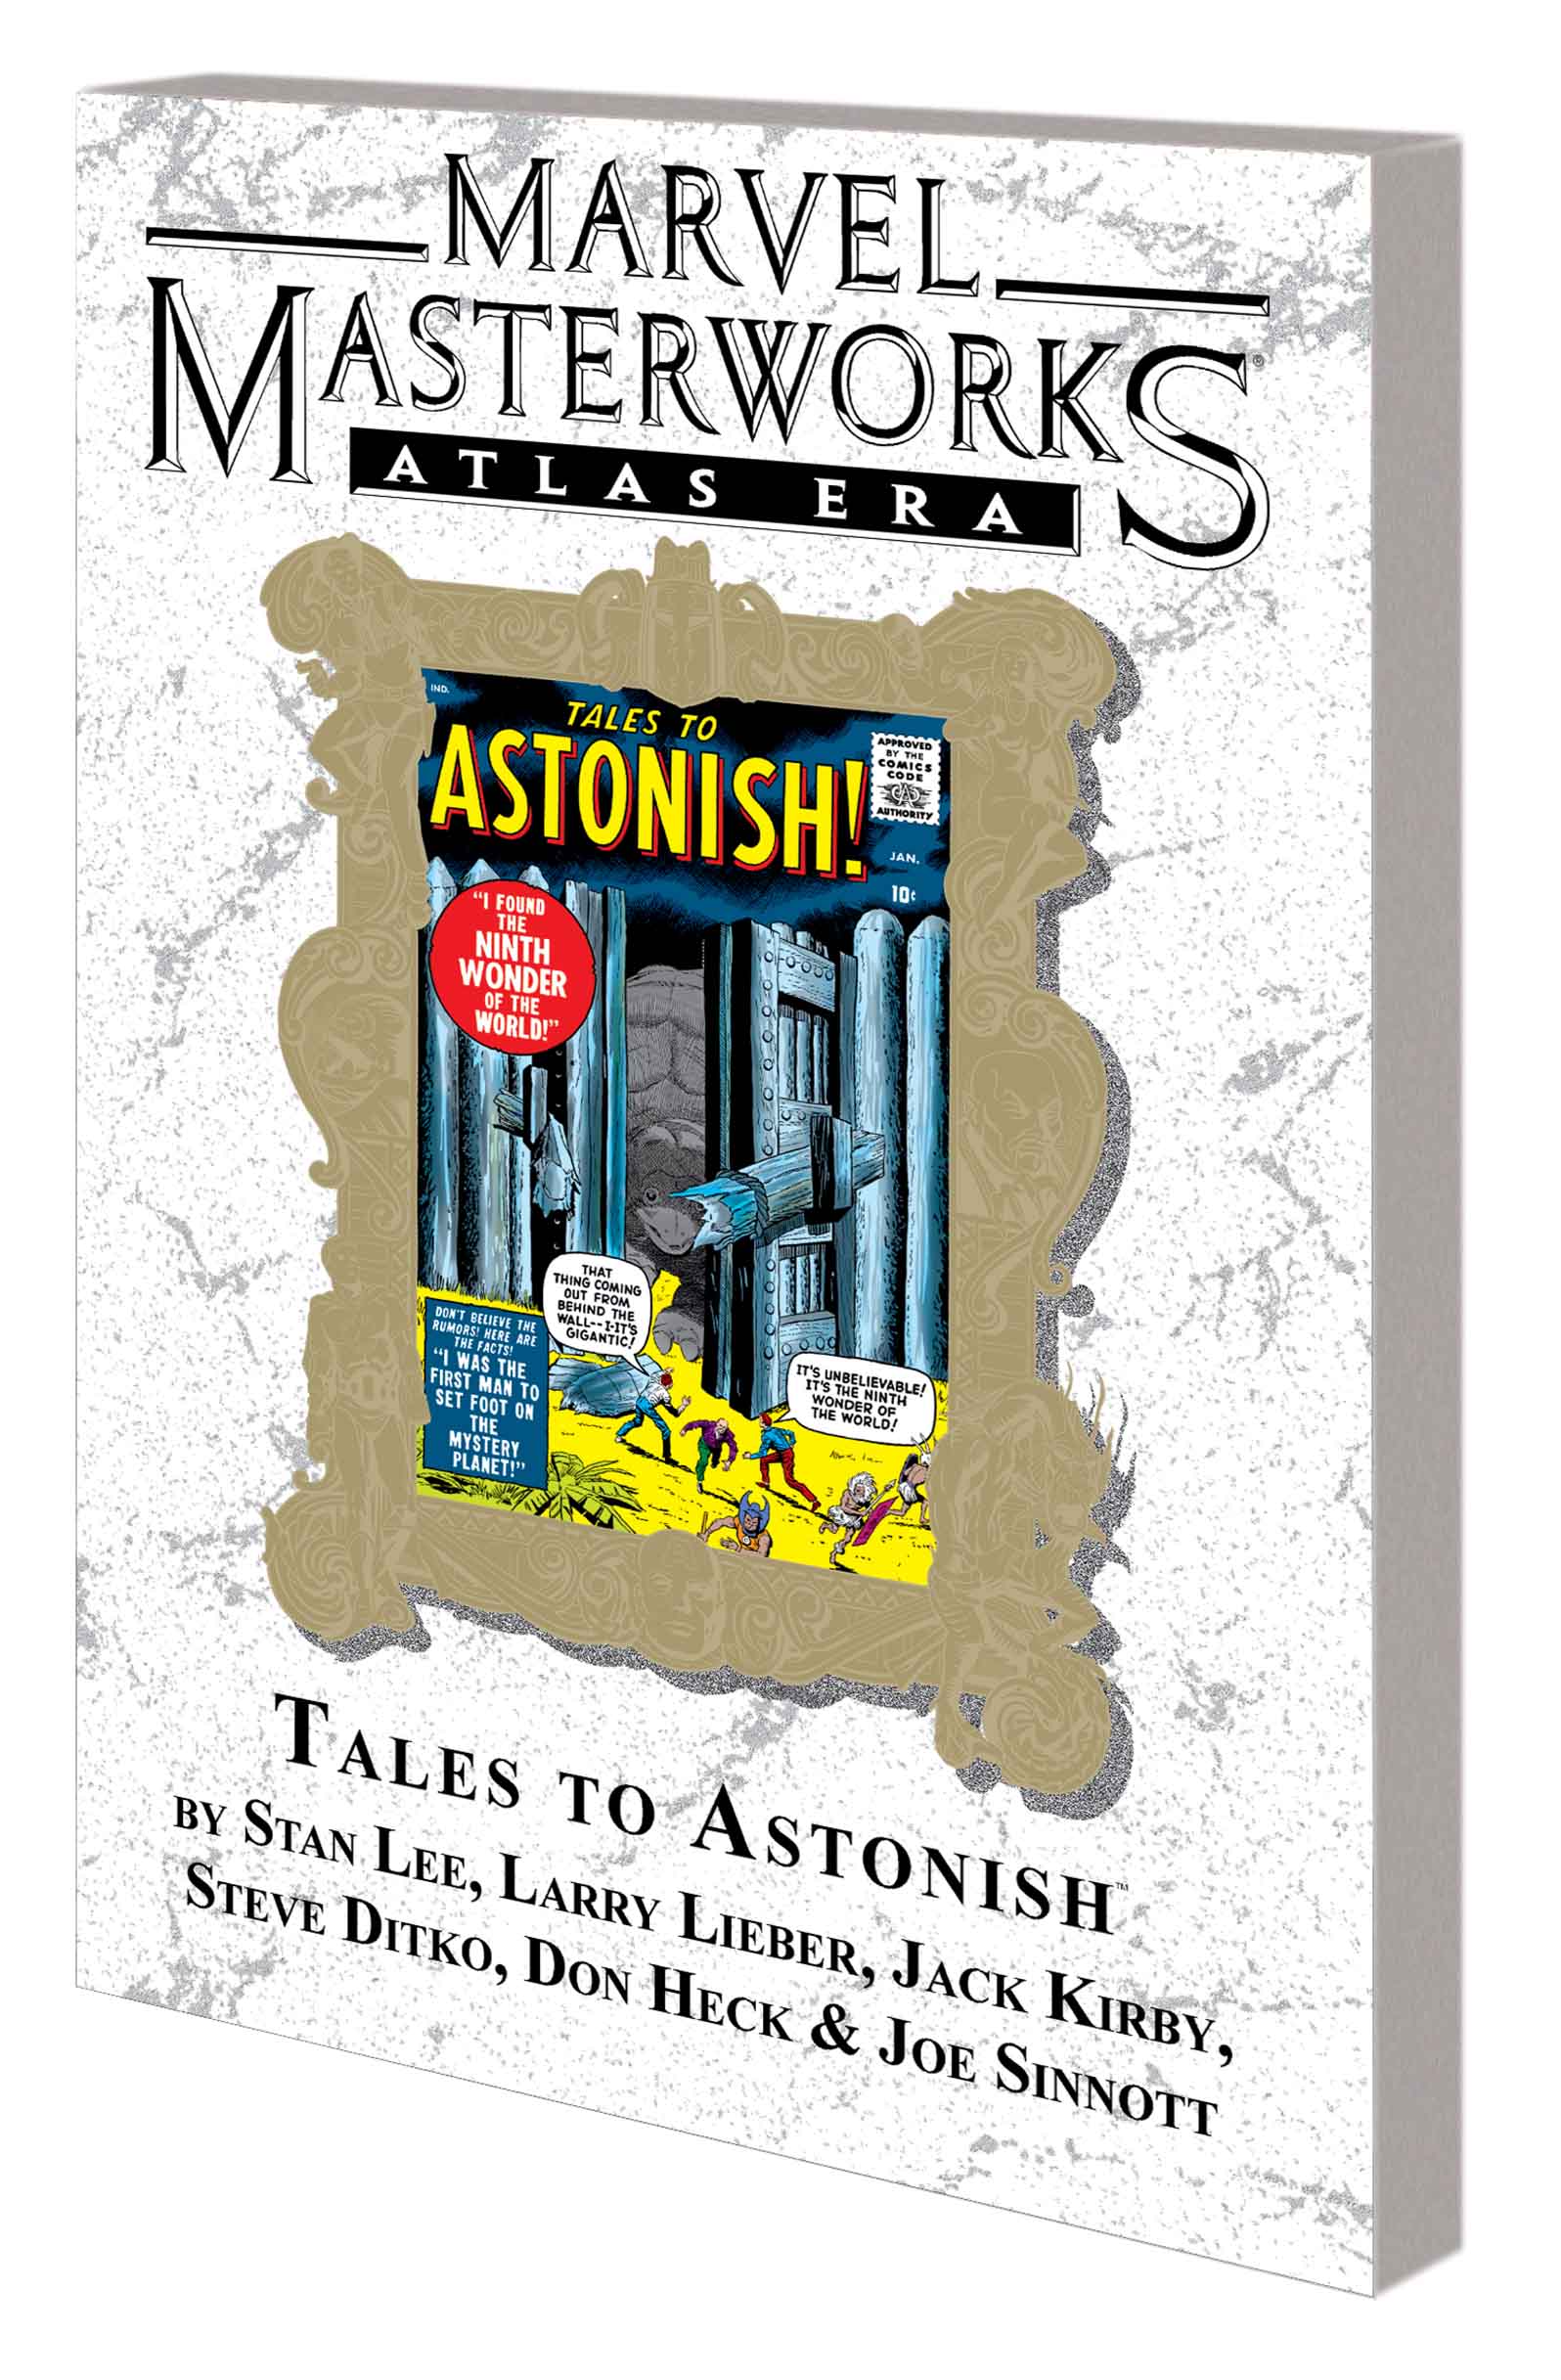 MARVEL MASTERWORKS: ATLAS ERA TALES TO ASTONISH VOL. 1 TPB VARIANT (DM ONLY) (Trade Paperback)